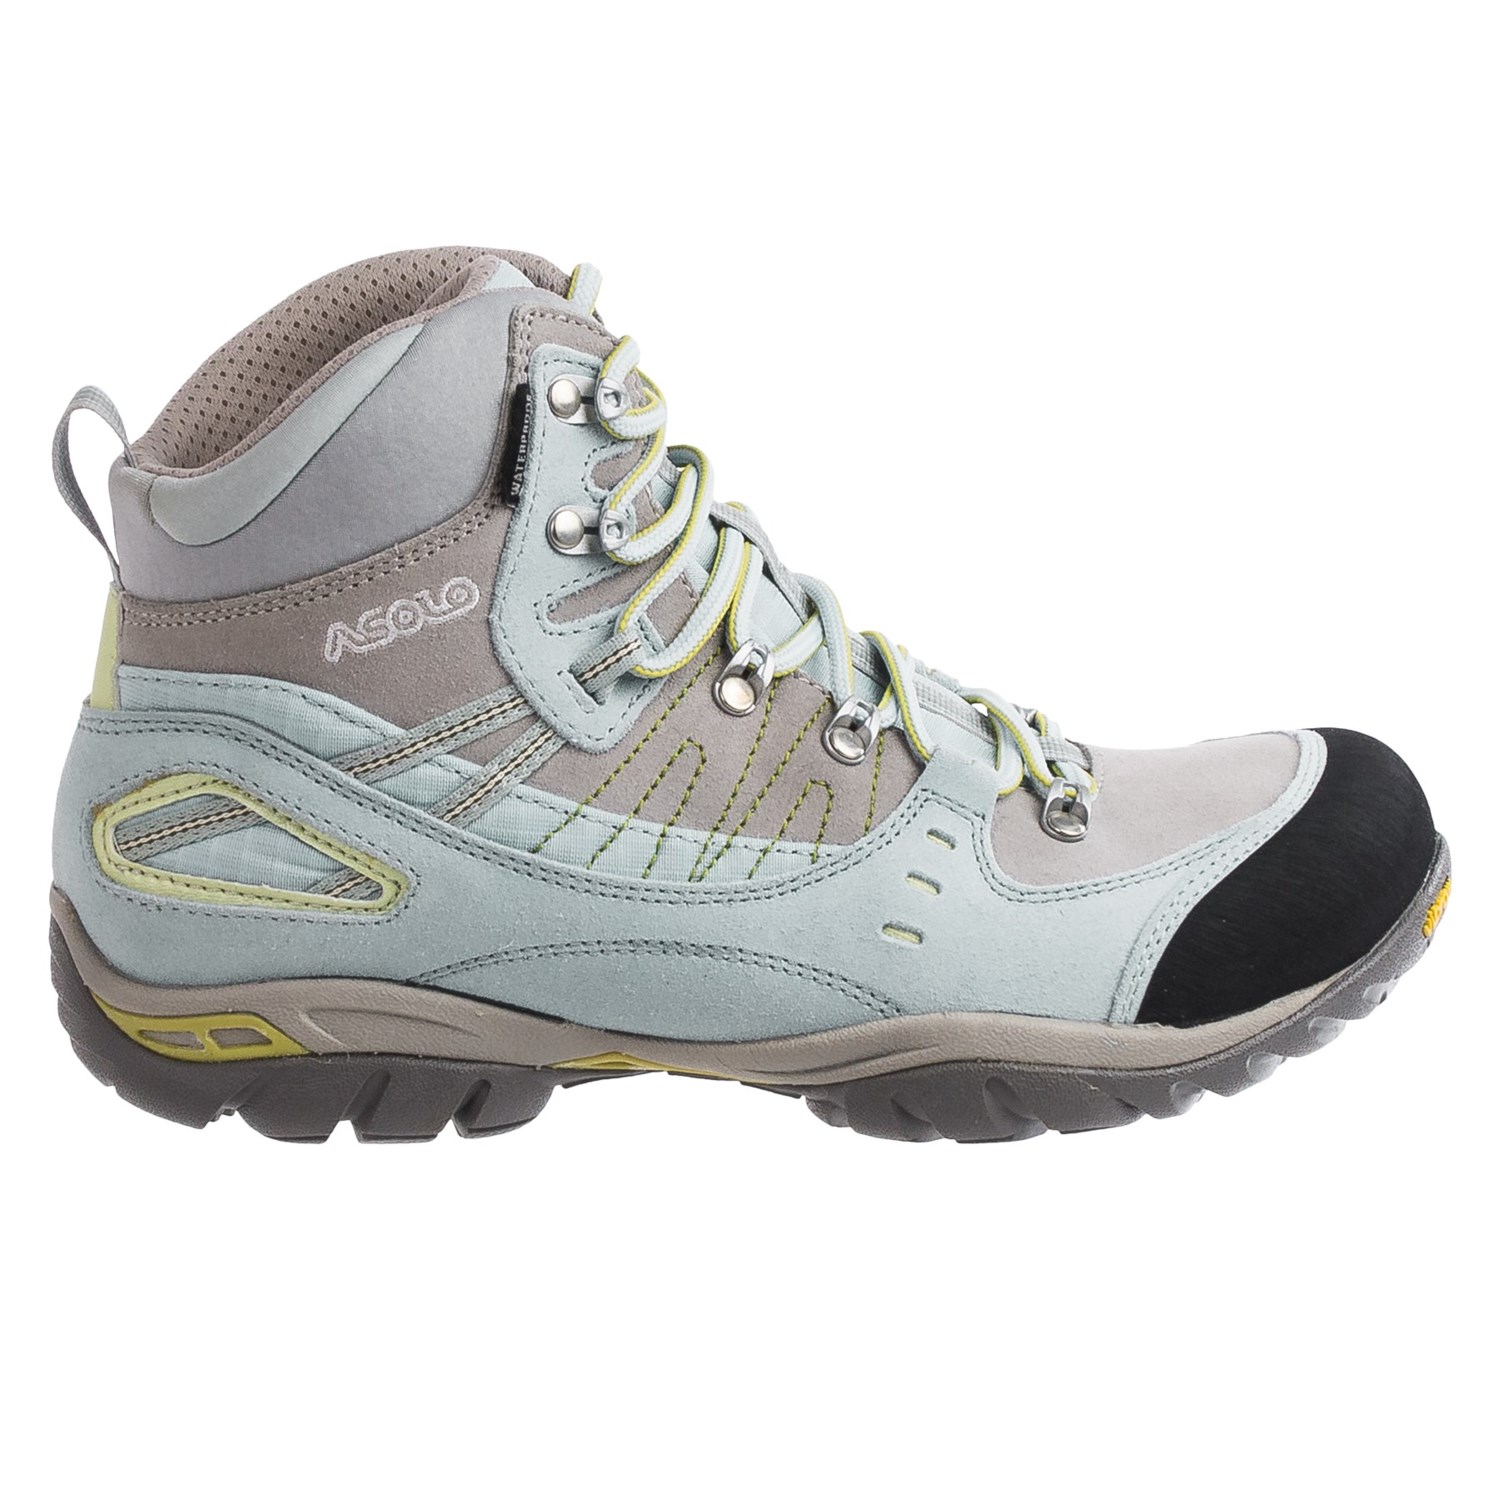 Asolo Yuma Hiking Boots (For Women) - Save 42%